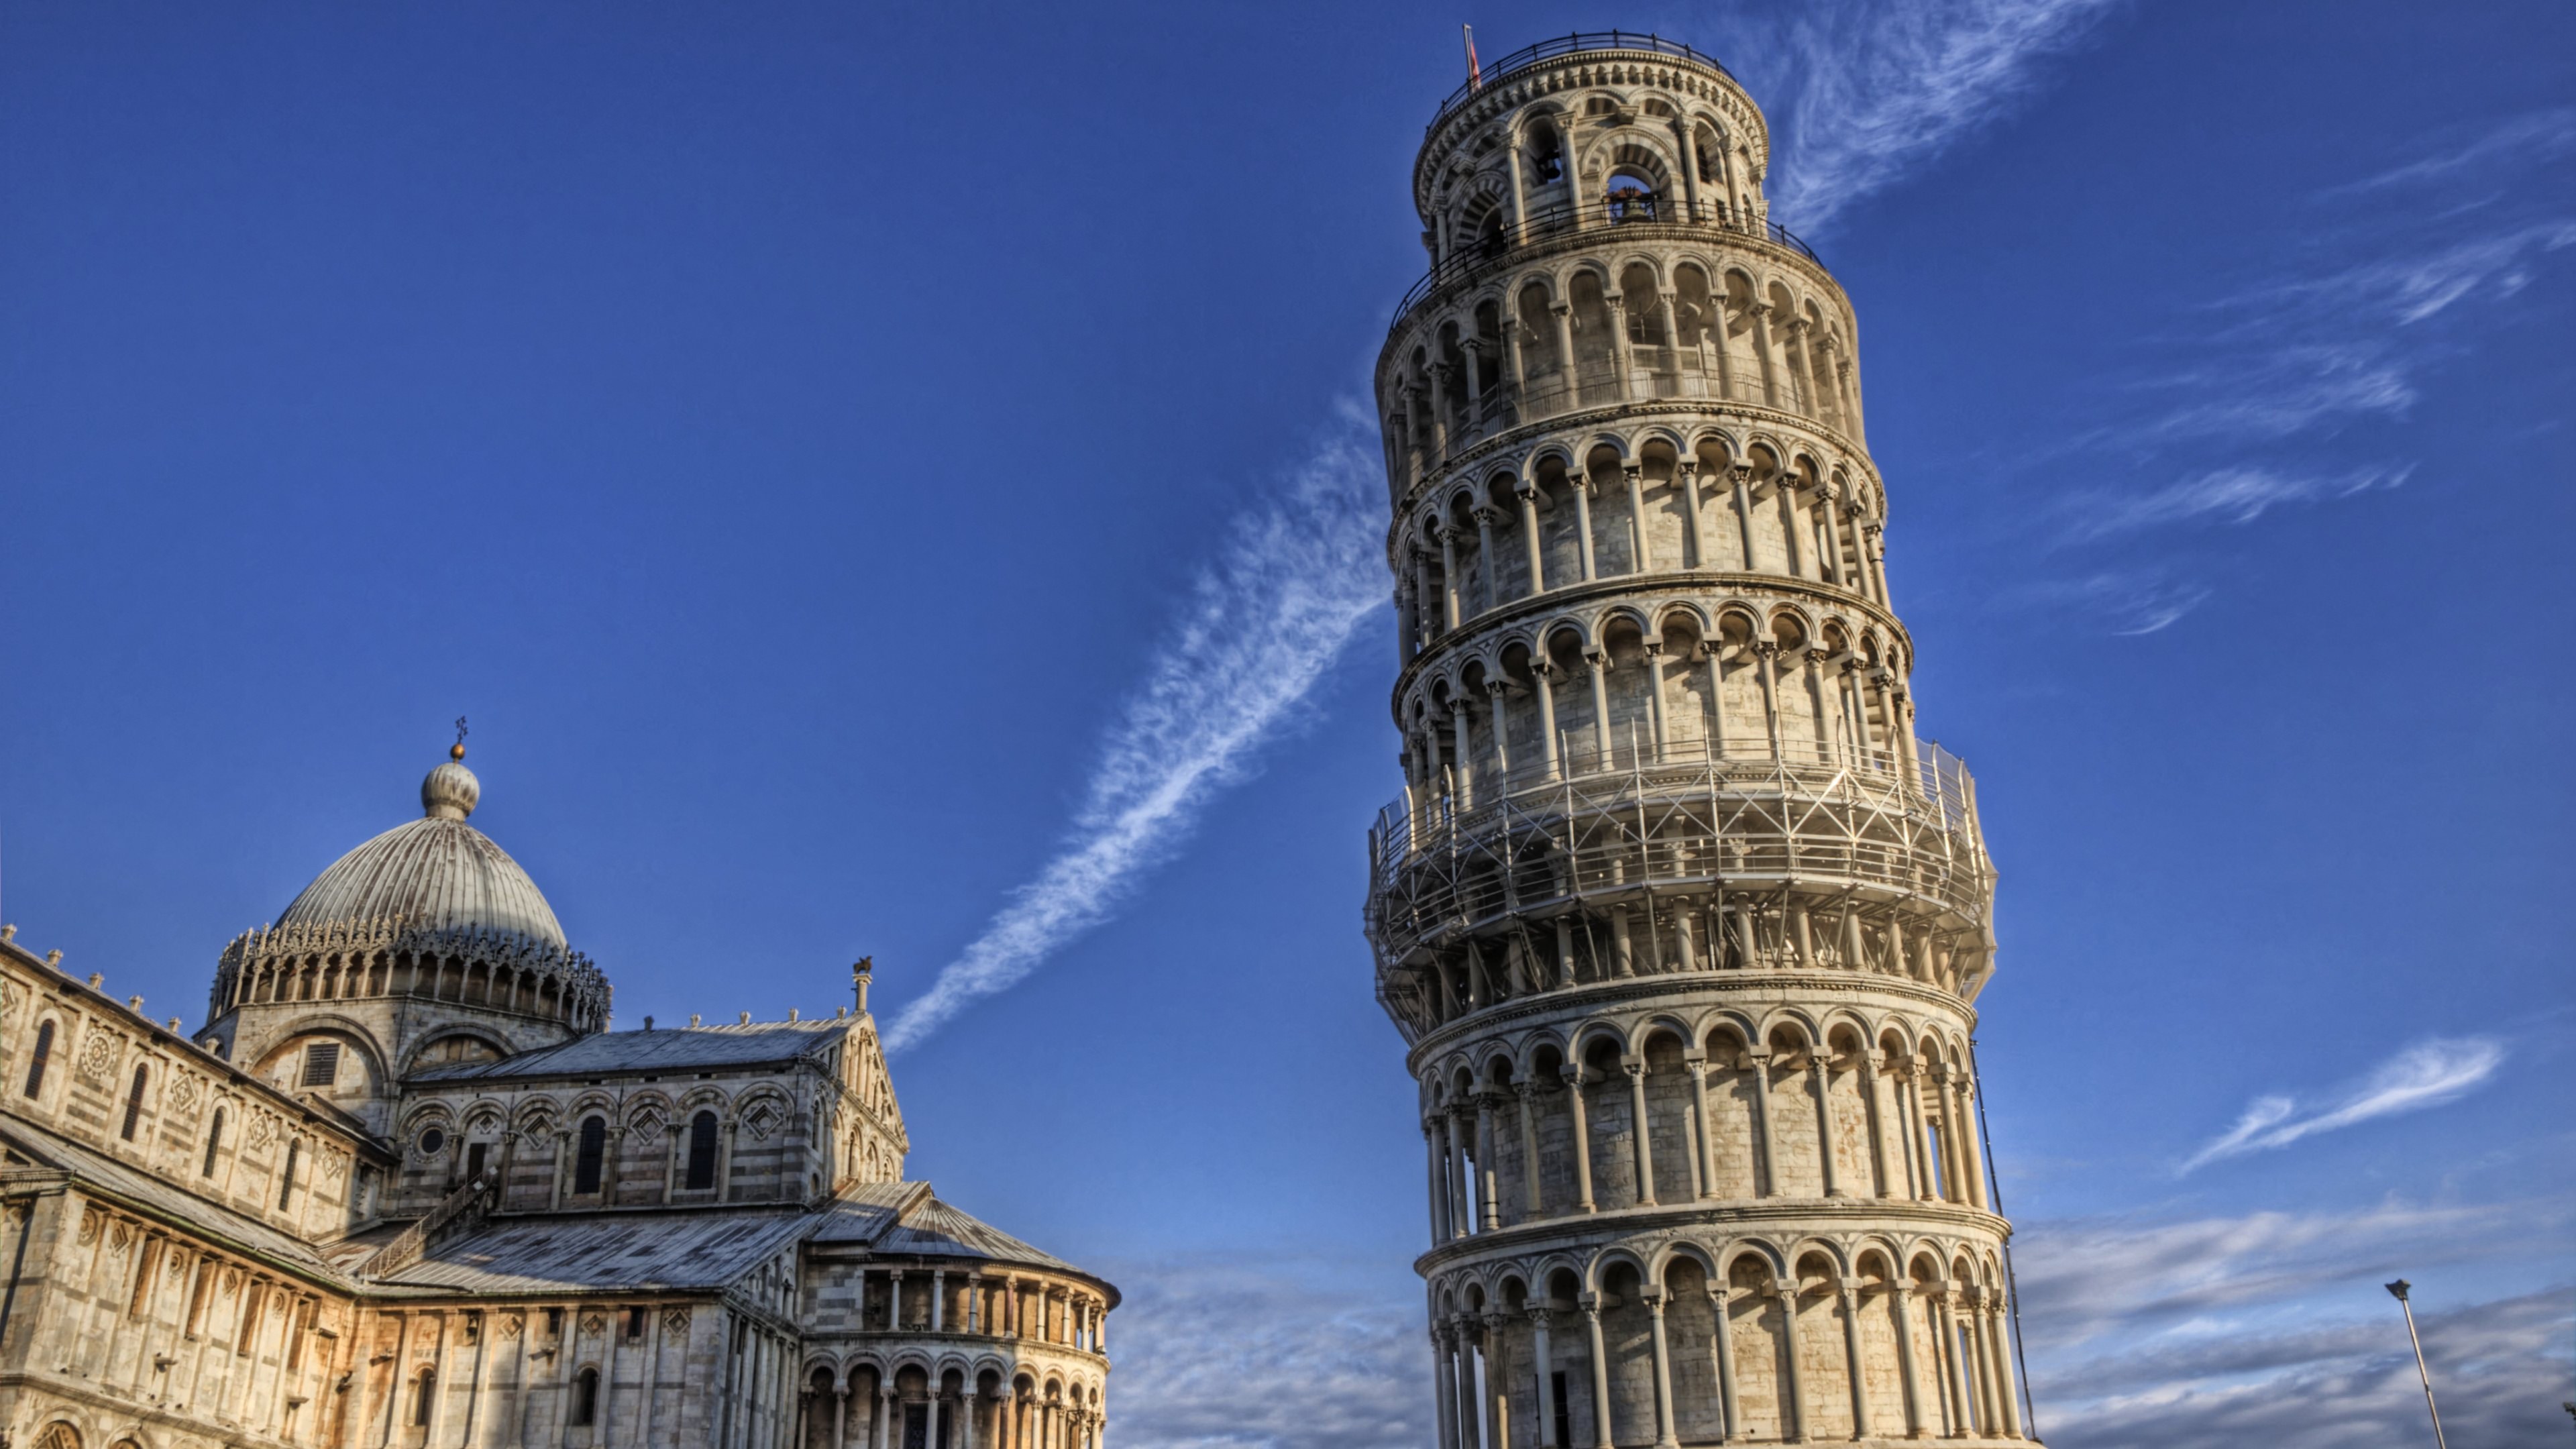 Leaning Tower Of Pisa 4k Ultra HD Wallpaper